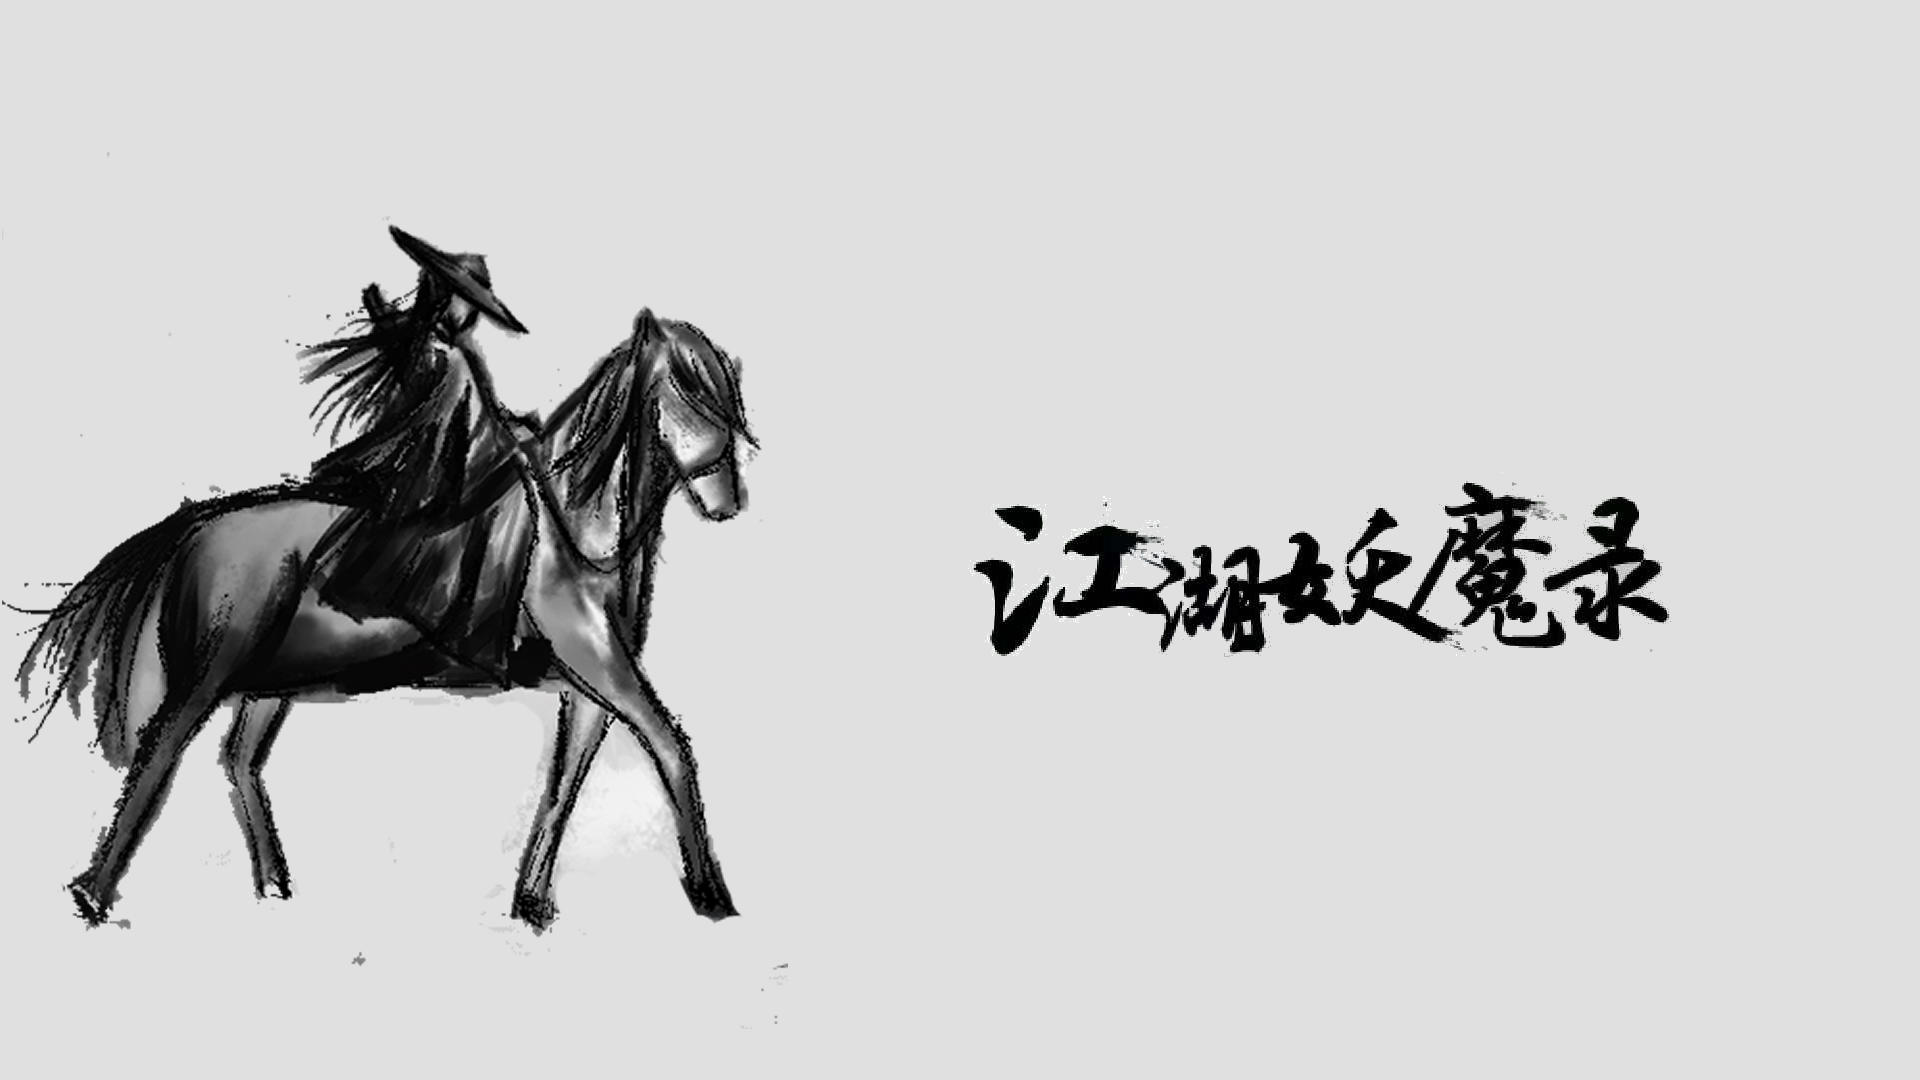 Banner of Registros de demonios de Jianghu 